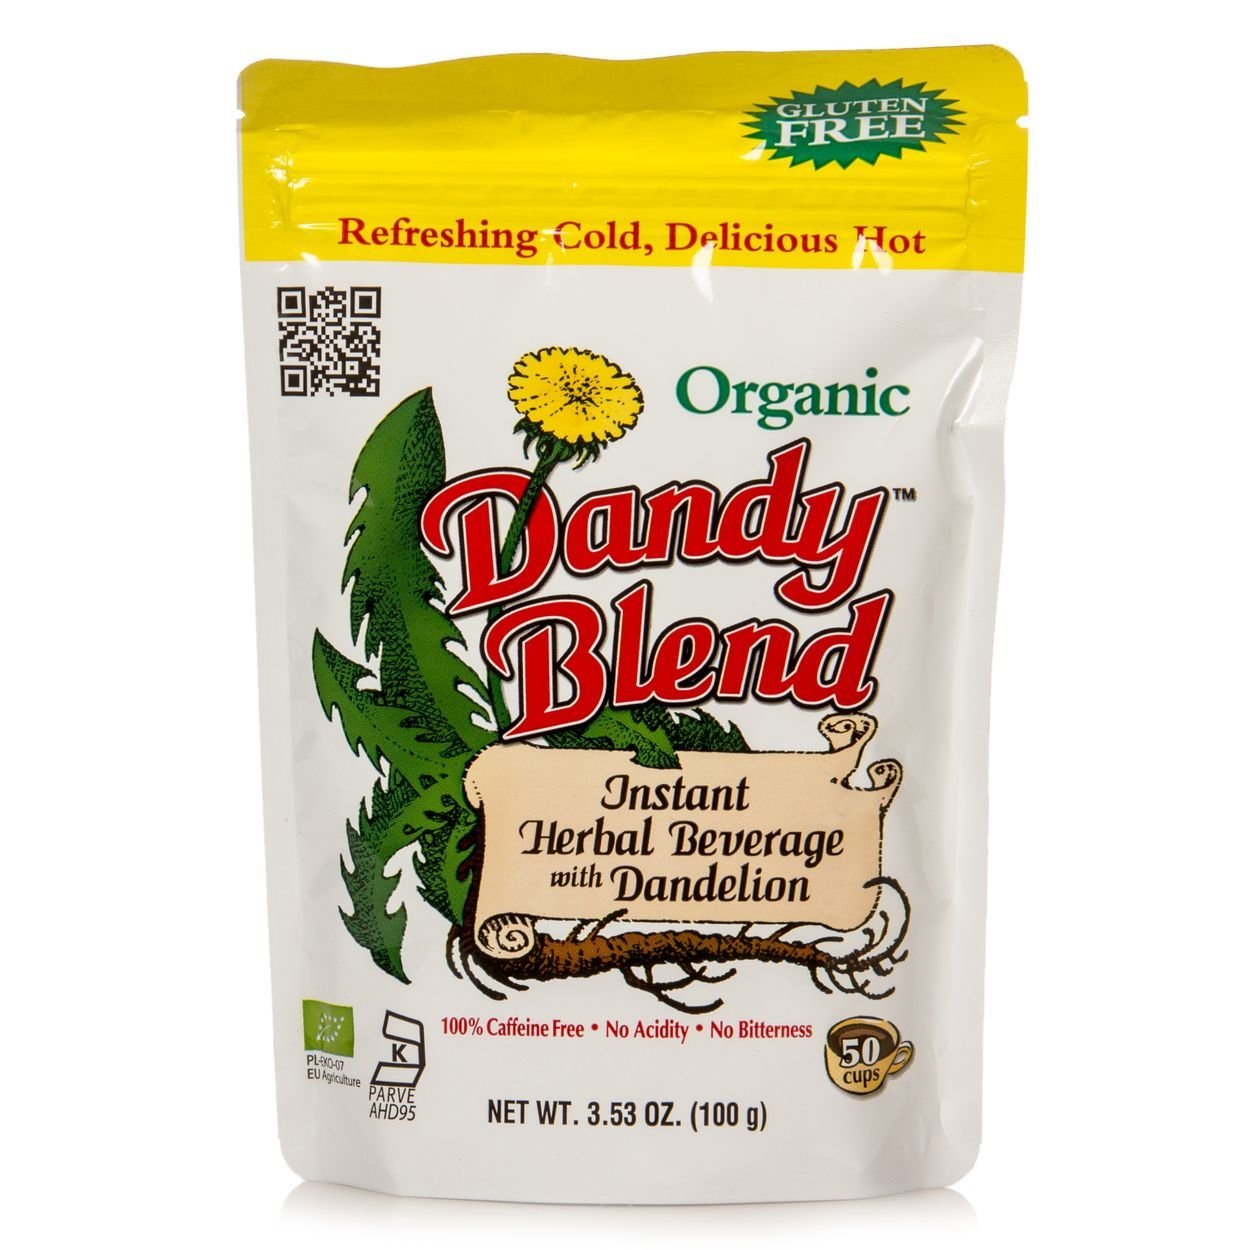 Dandy Blend Instant Herbal Coffee Substitute with Dandelion, Organic